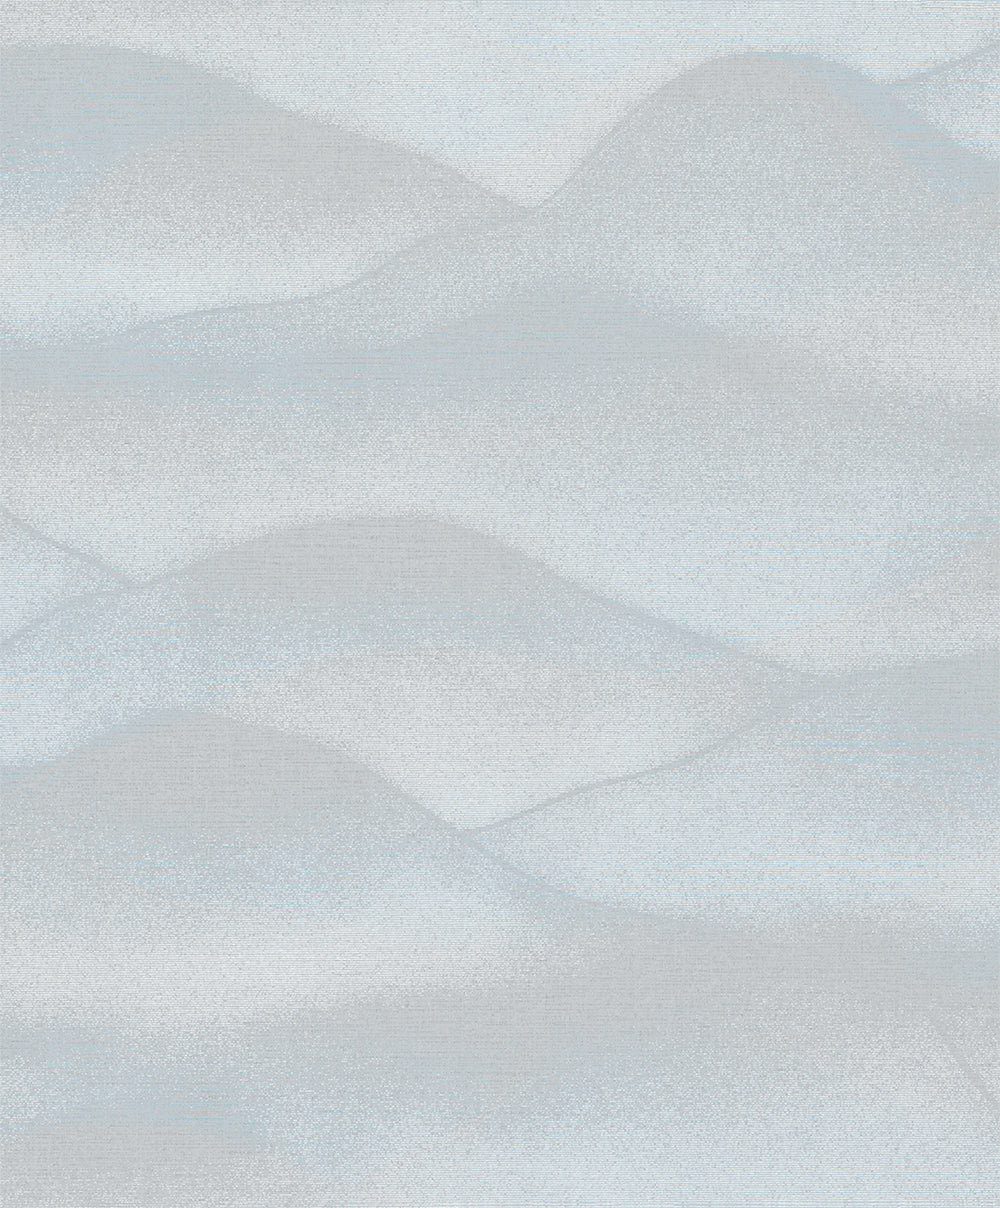 Habitat - Waves geometric wallpaper Marburg Roll Grey-White  34017